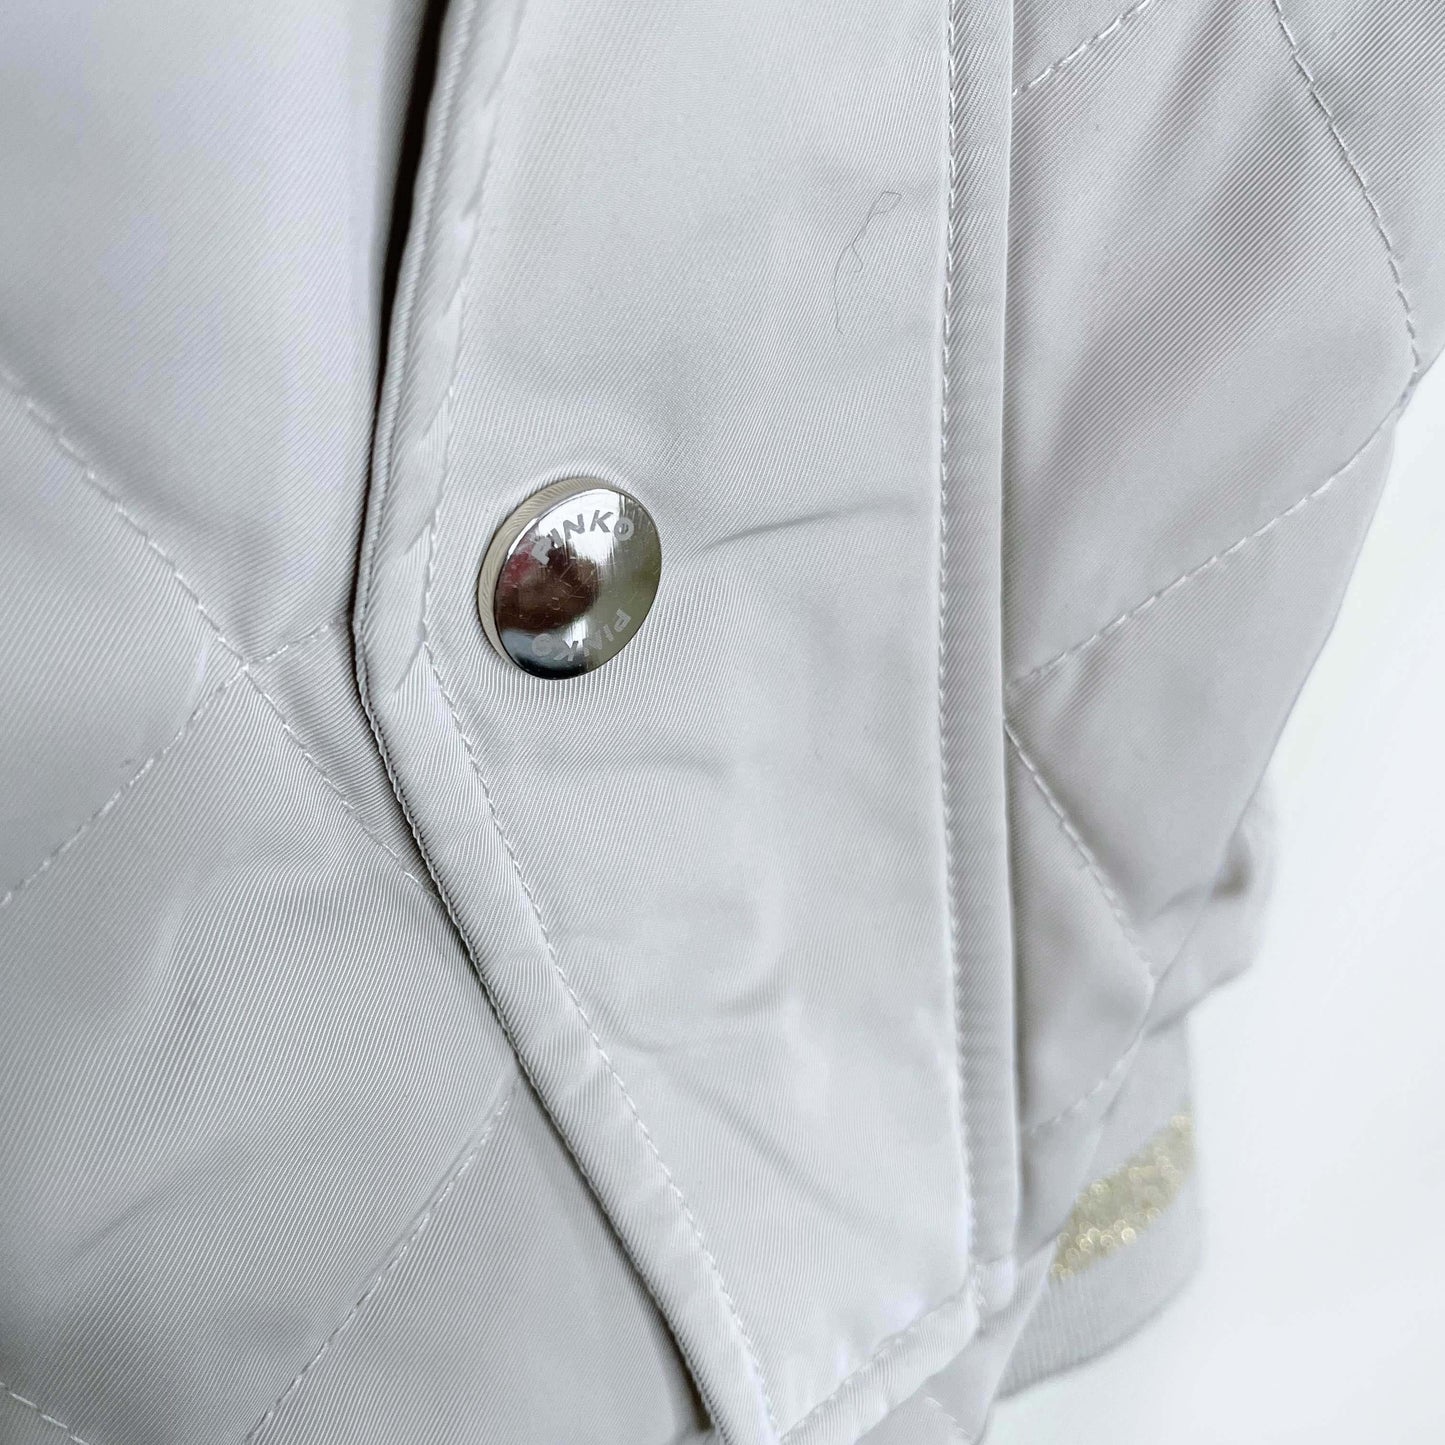 pinko nylon quilted long bomber jacket - size 6